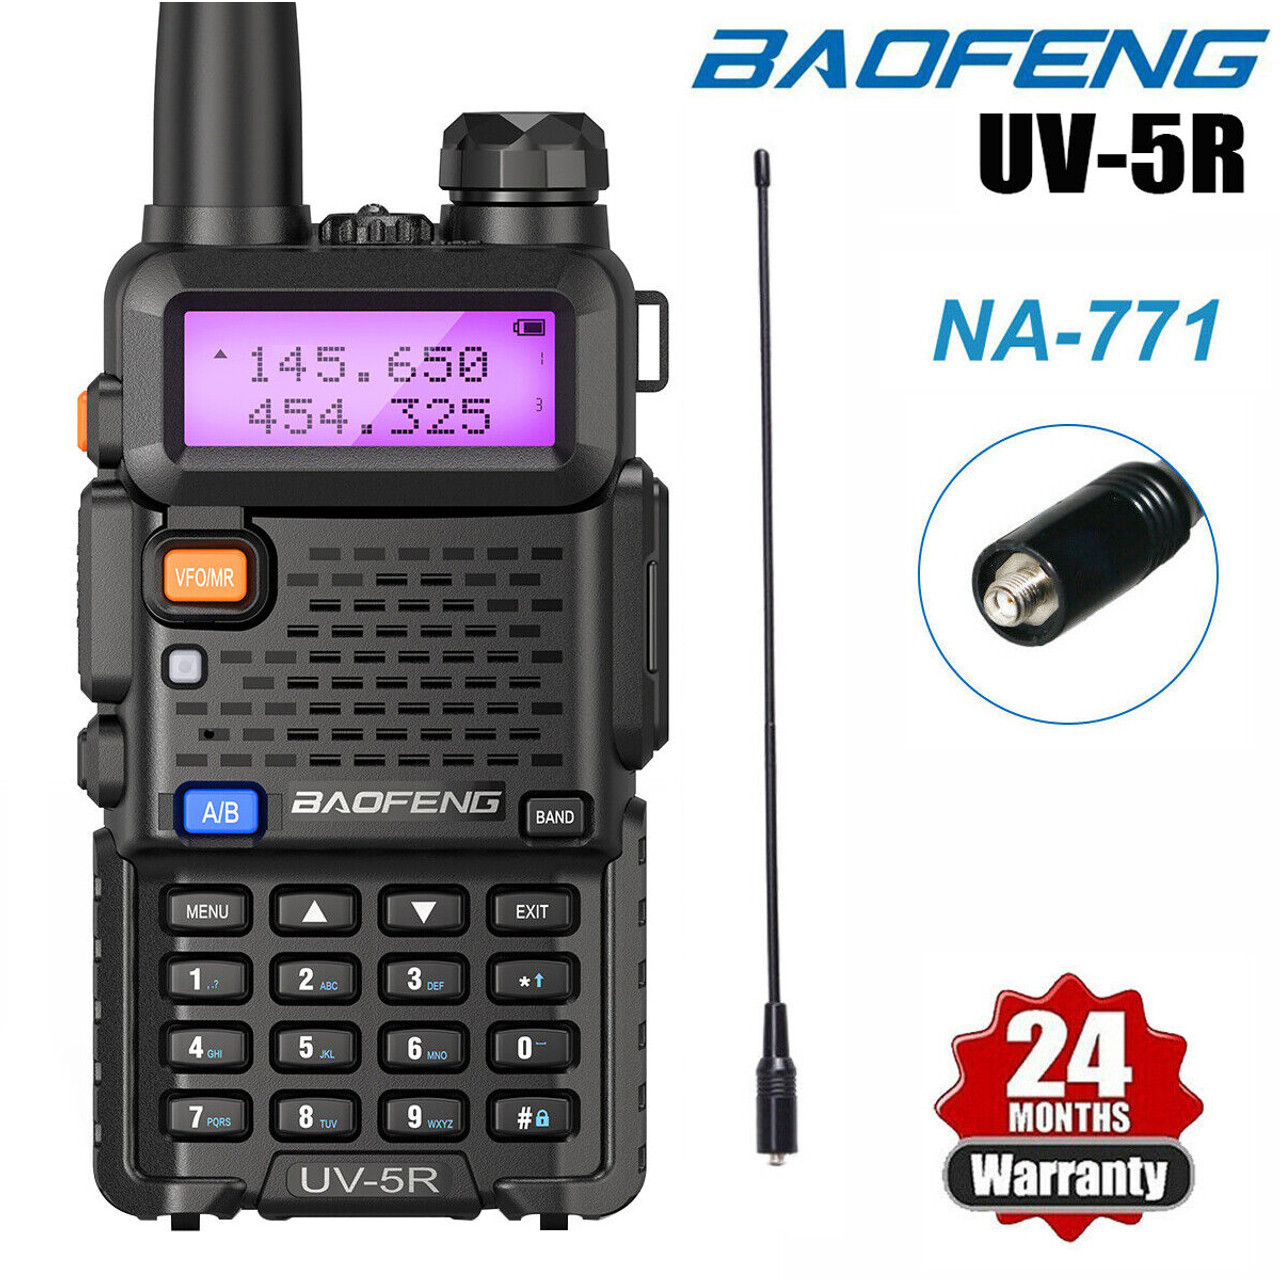 BaoFeng Radio (Upgraded from BaoFeng UV-5R) 8Watt Ham Radio Handheld with Extra 1800mAh Battery and 771 Long Antenna Dual Band Walkie Talkies Two Way - 5